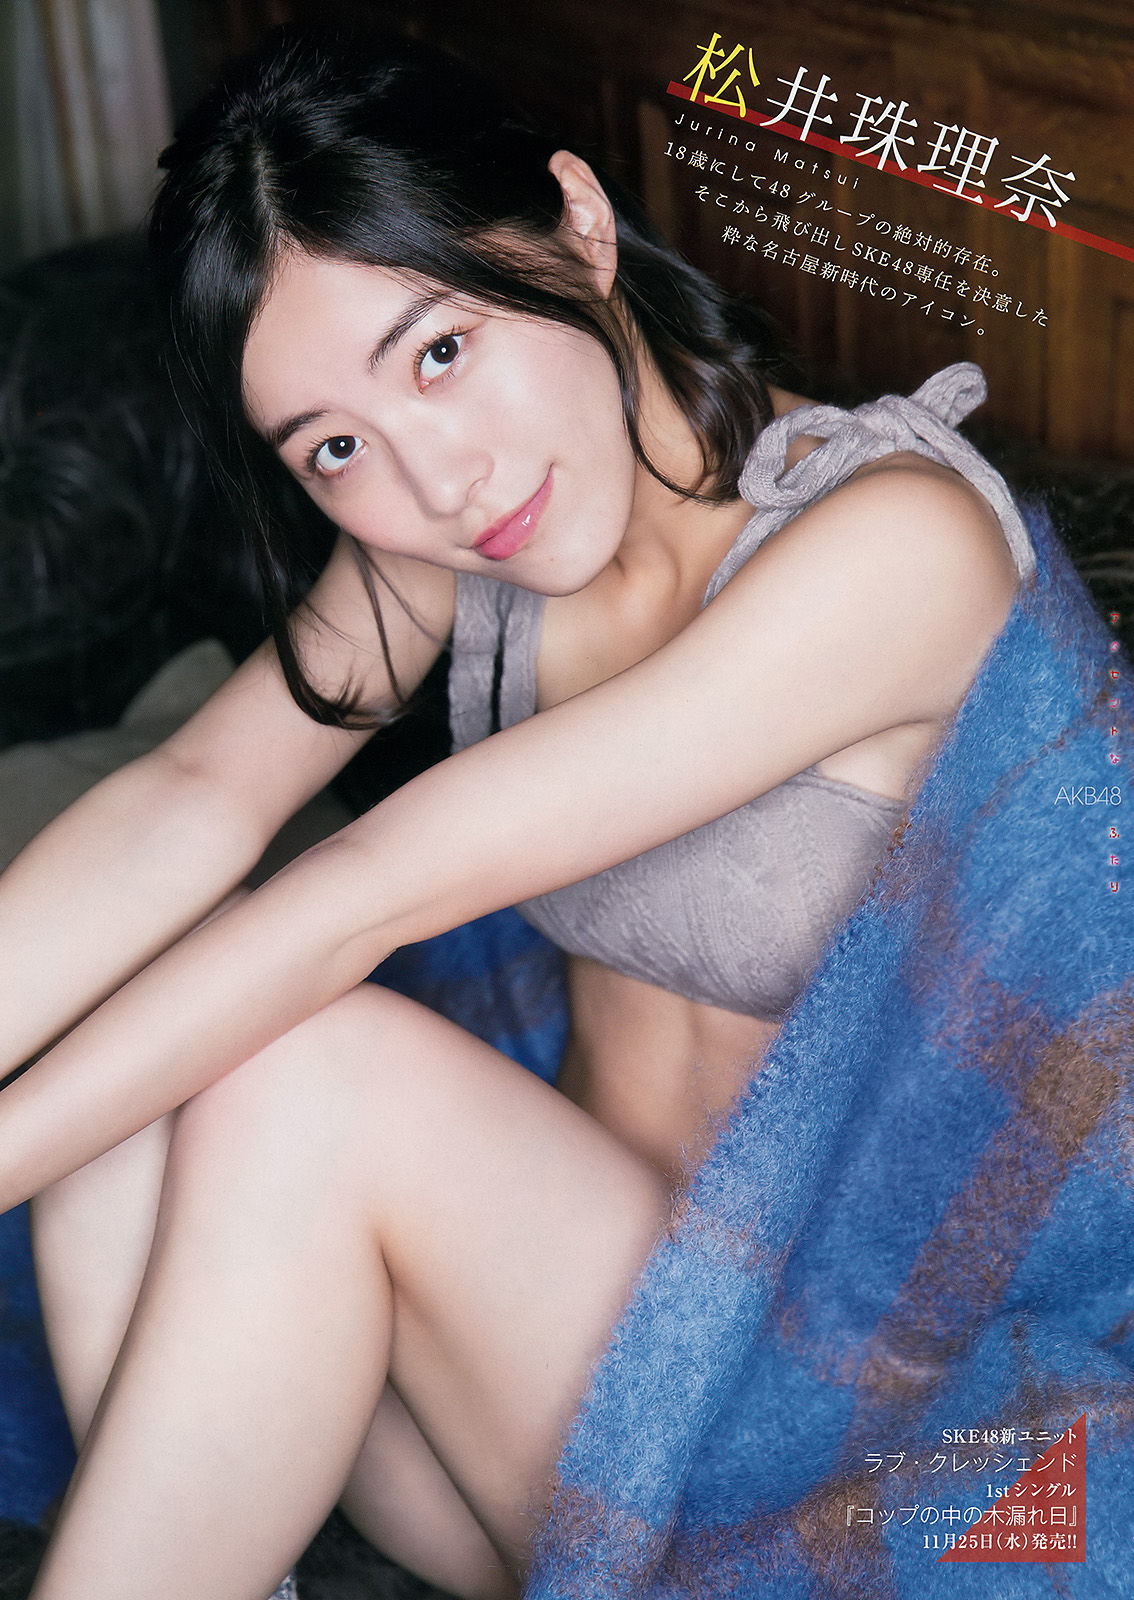 [Young Magazine] 2015年No.51 宮脇咲良 松井珠理奈